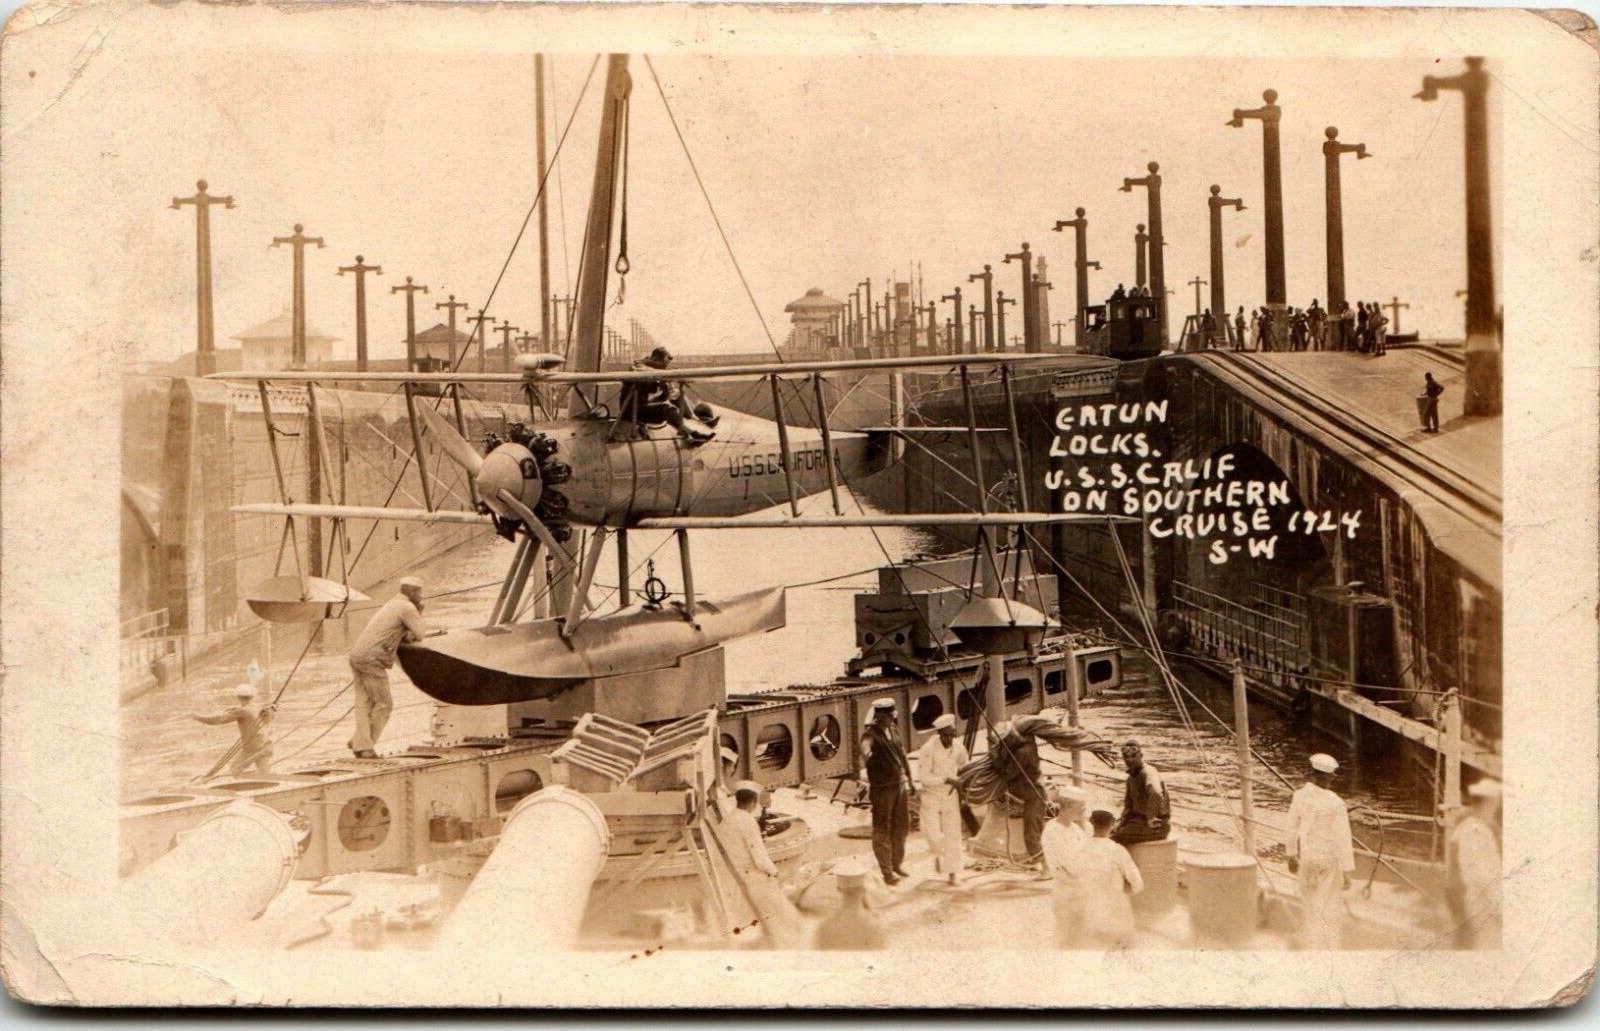 RPPC U.S.S. California On Southern Cruise 1924 Eaton Locks